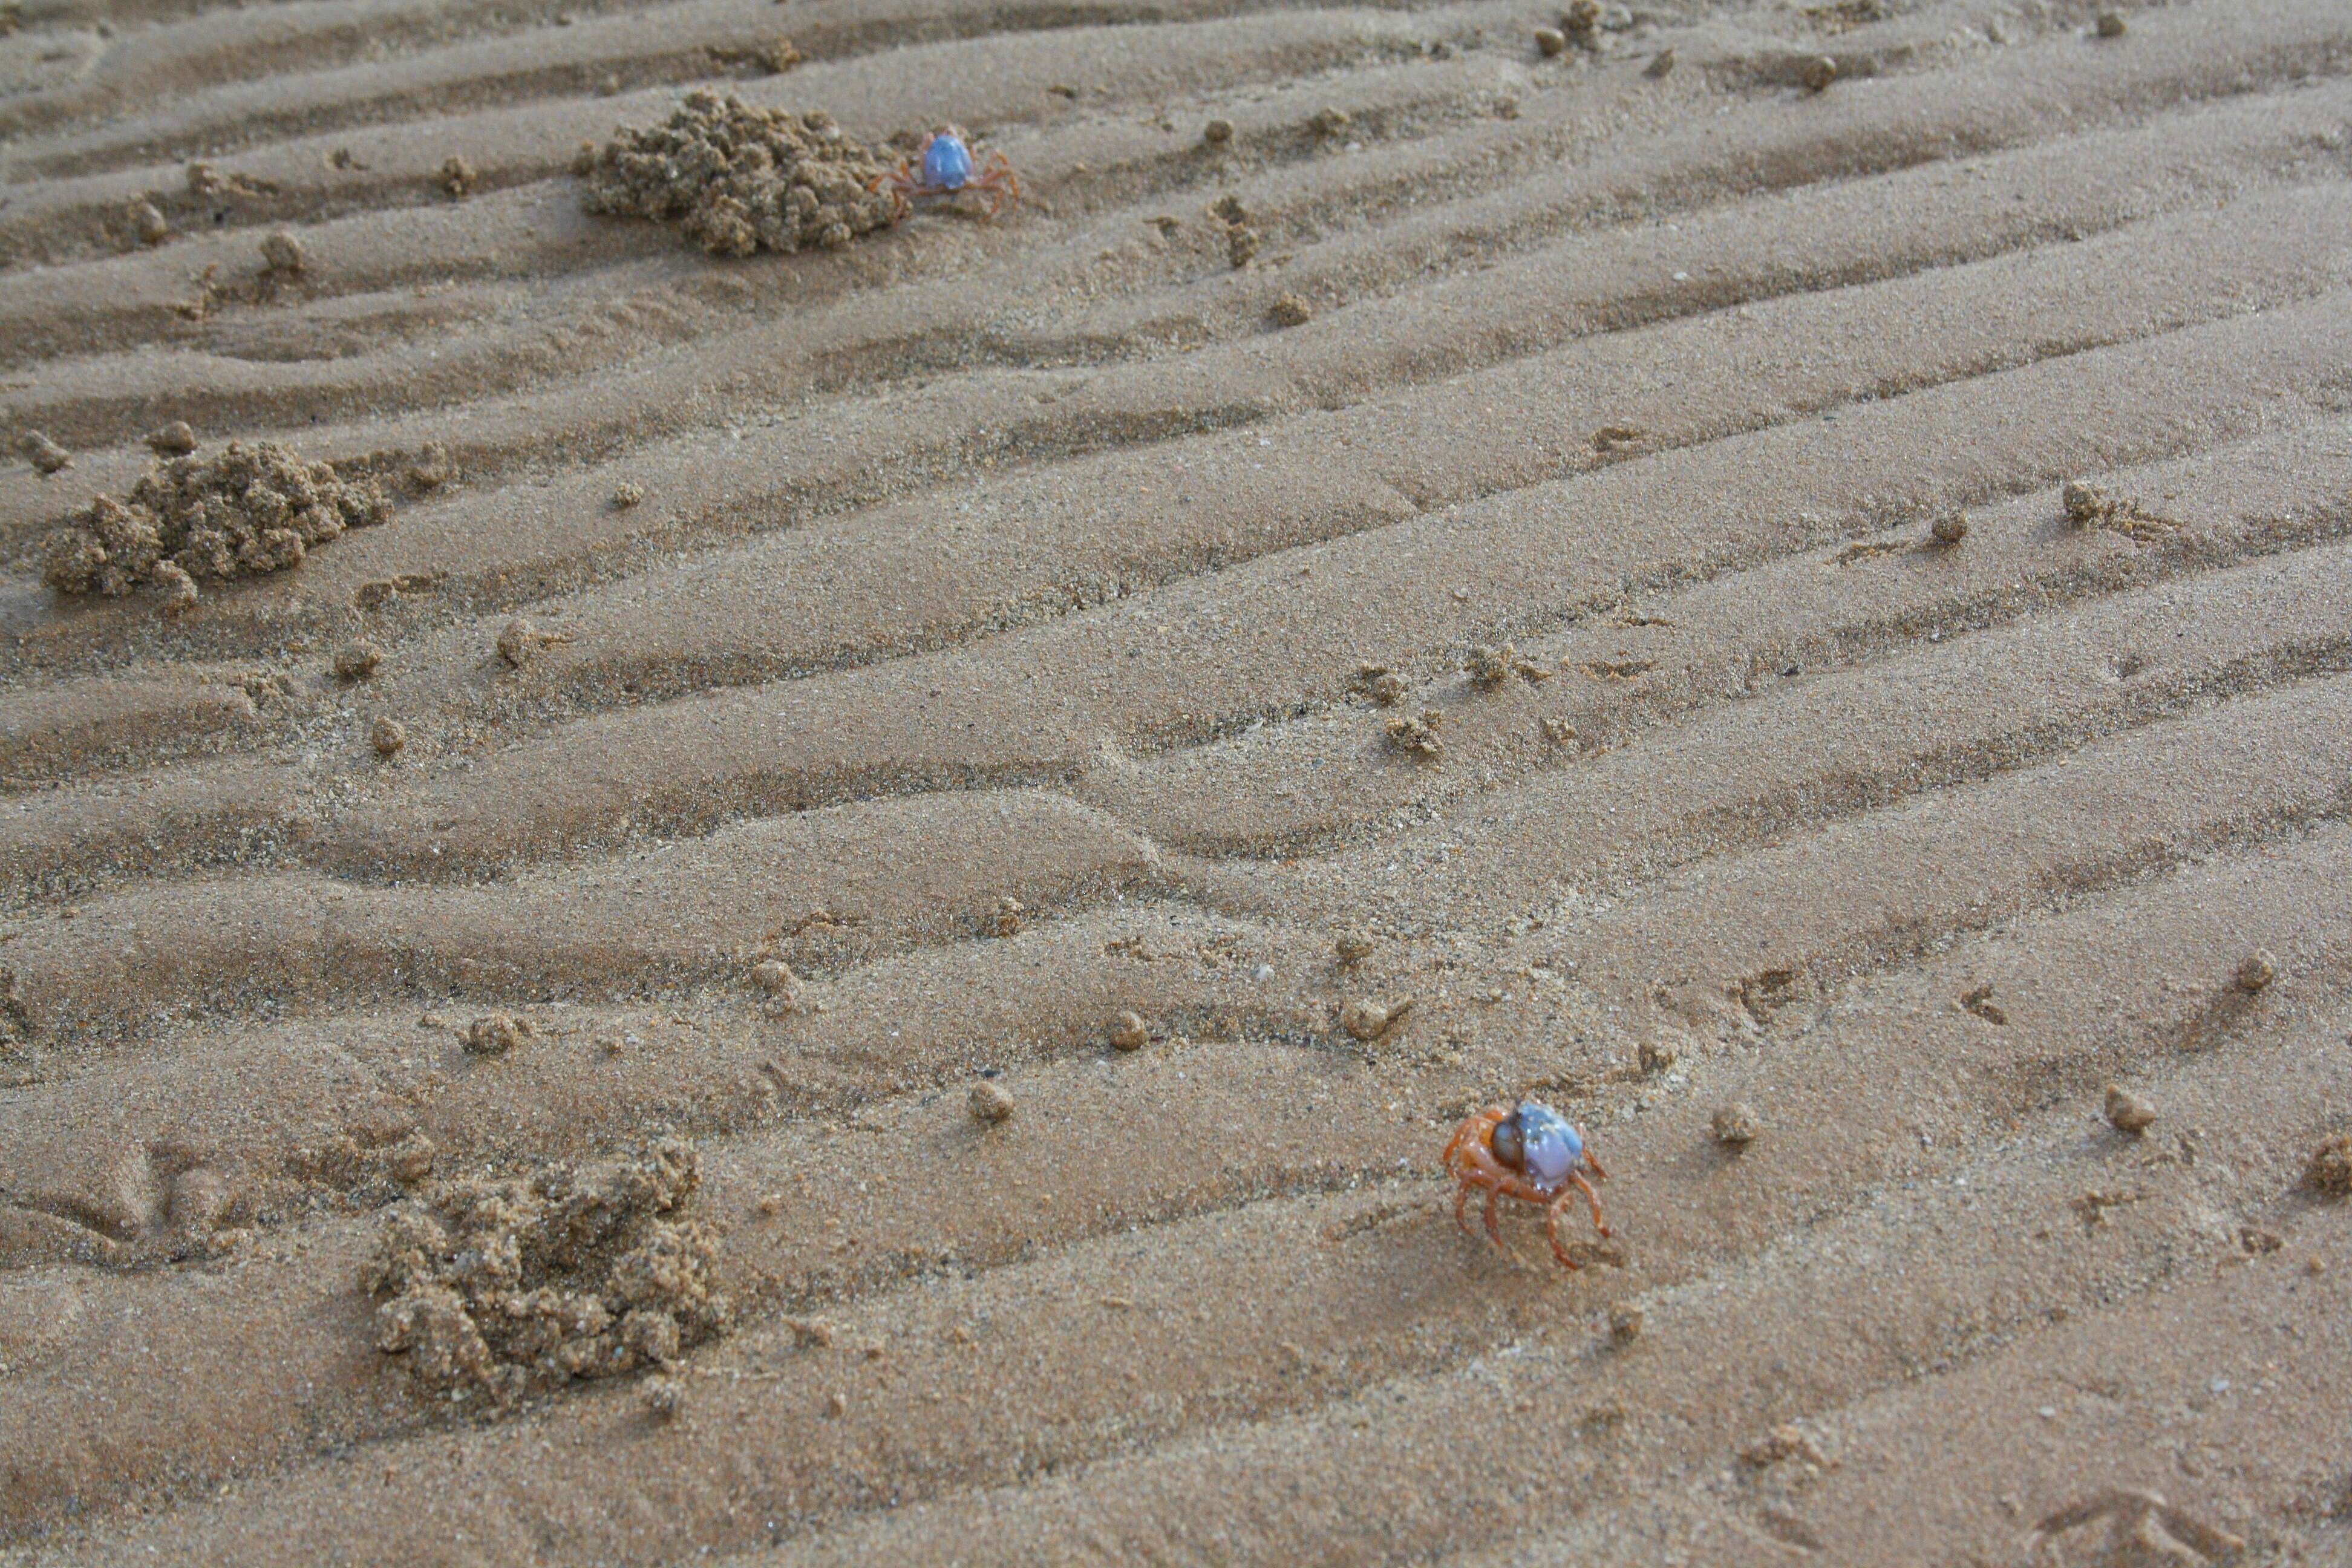 Image of grenadier crabs